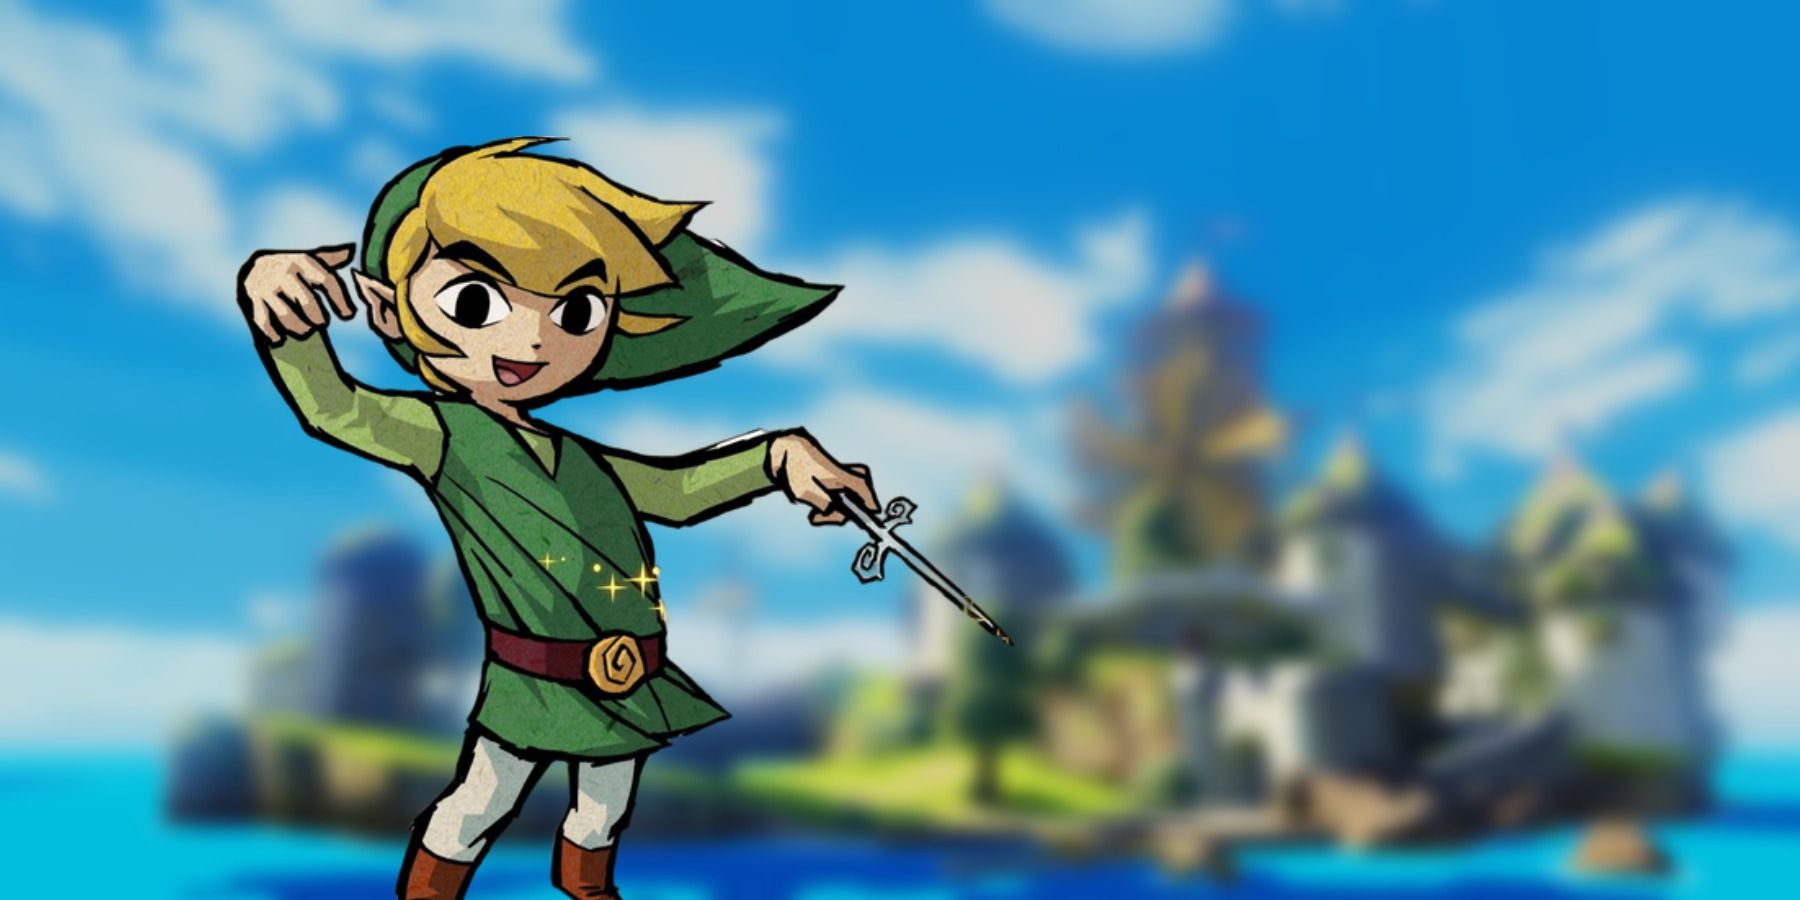 Zelda's Ocarina Of Time PC Port Shows Wind Waker Deserves A Remaster